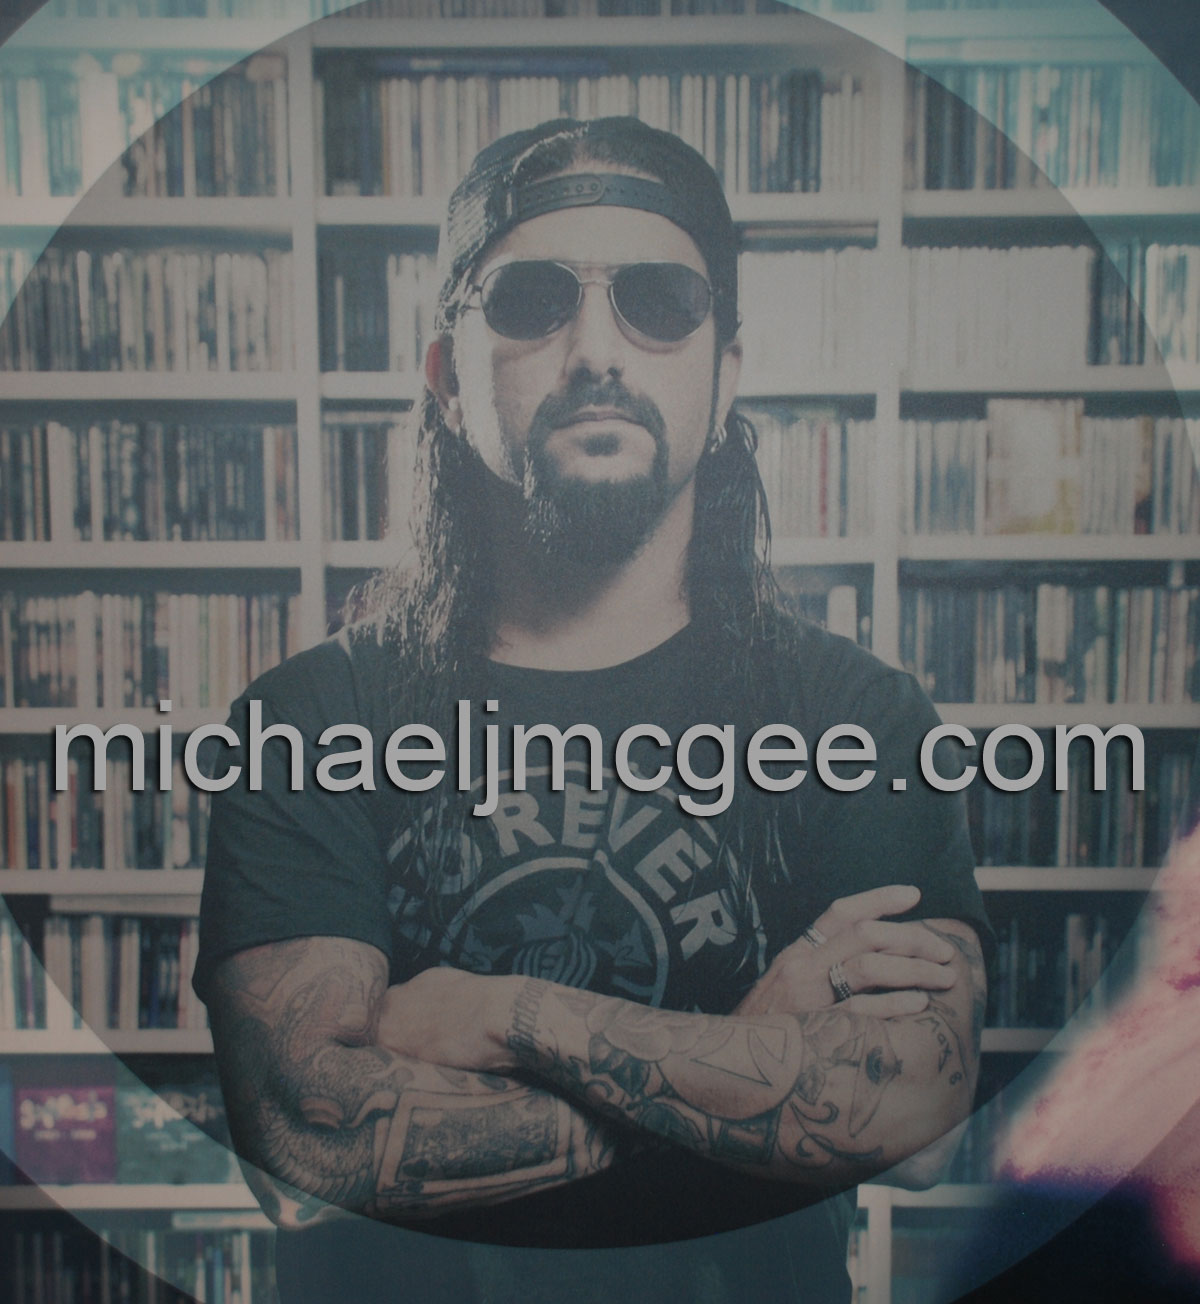 Mike Portnoy / michaeljmcgee.com